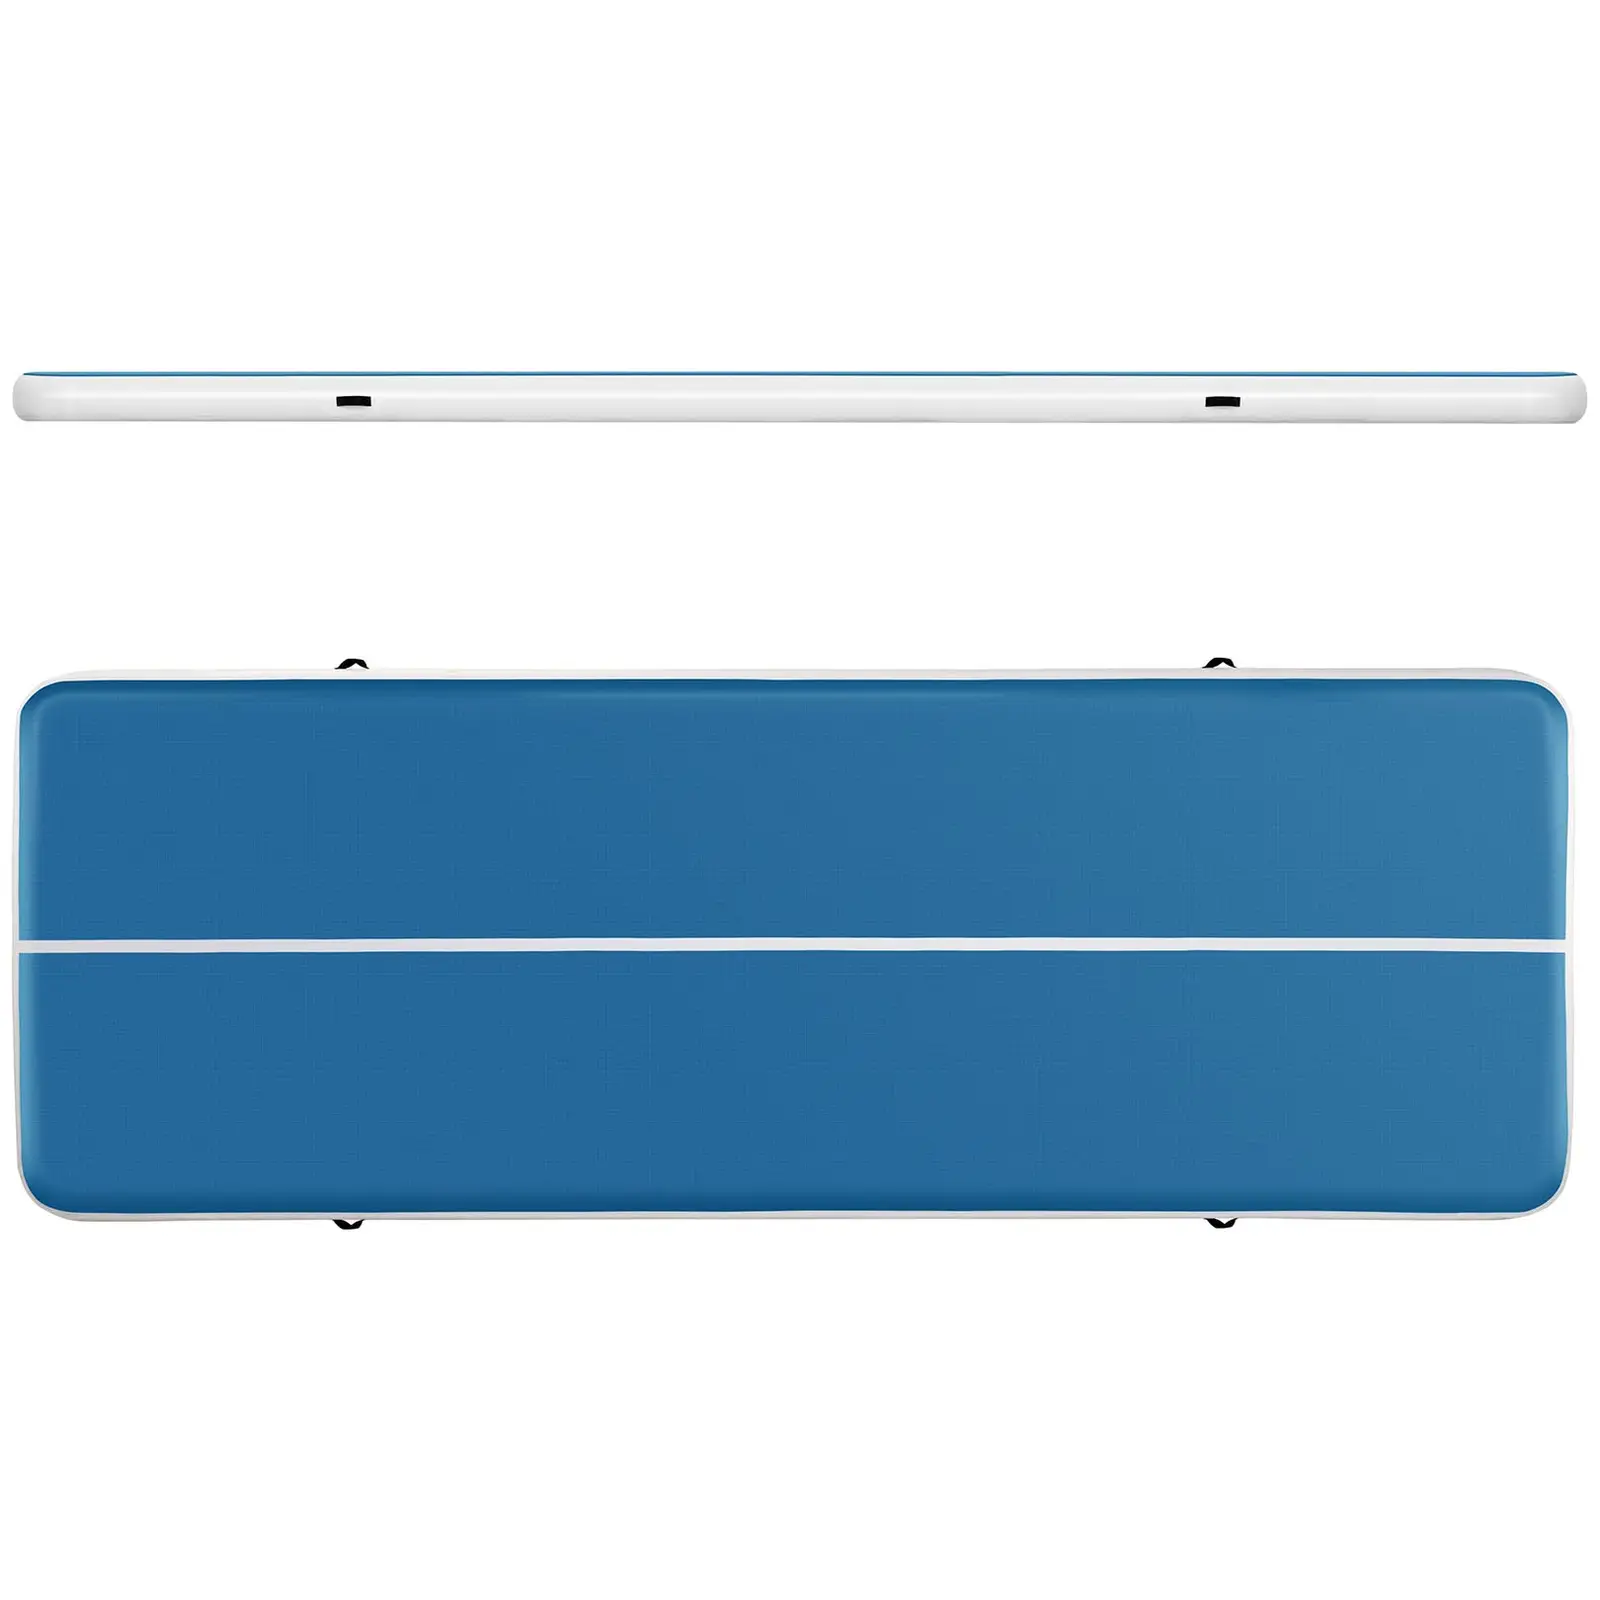 Set Aufblasbare Turnmatte inklusive Luftpumpe - 600 x 200 x 20 cm - 400 kg - blau/weiß